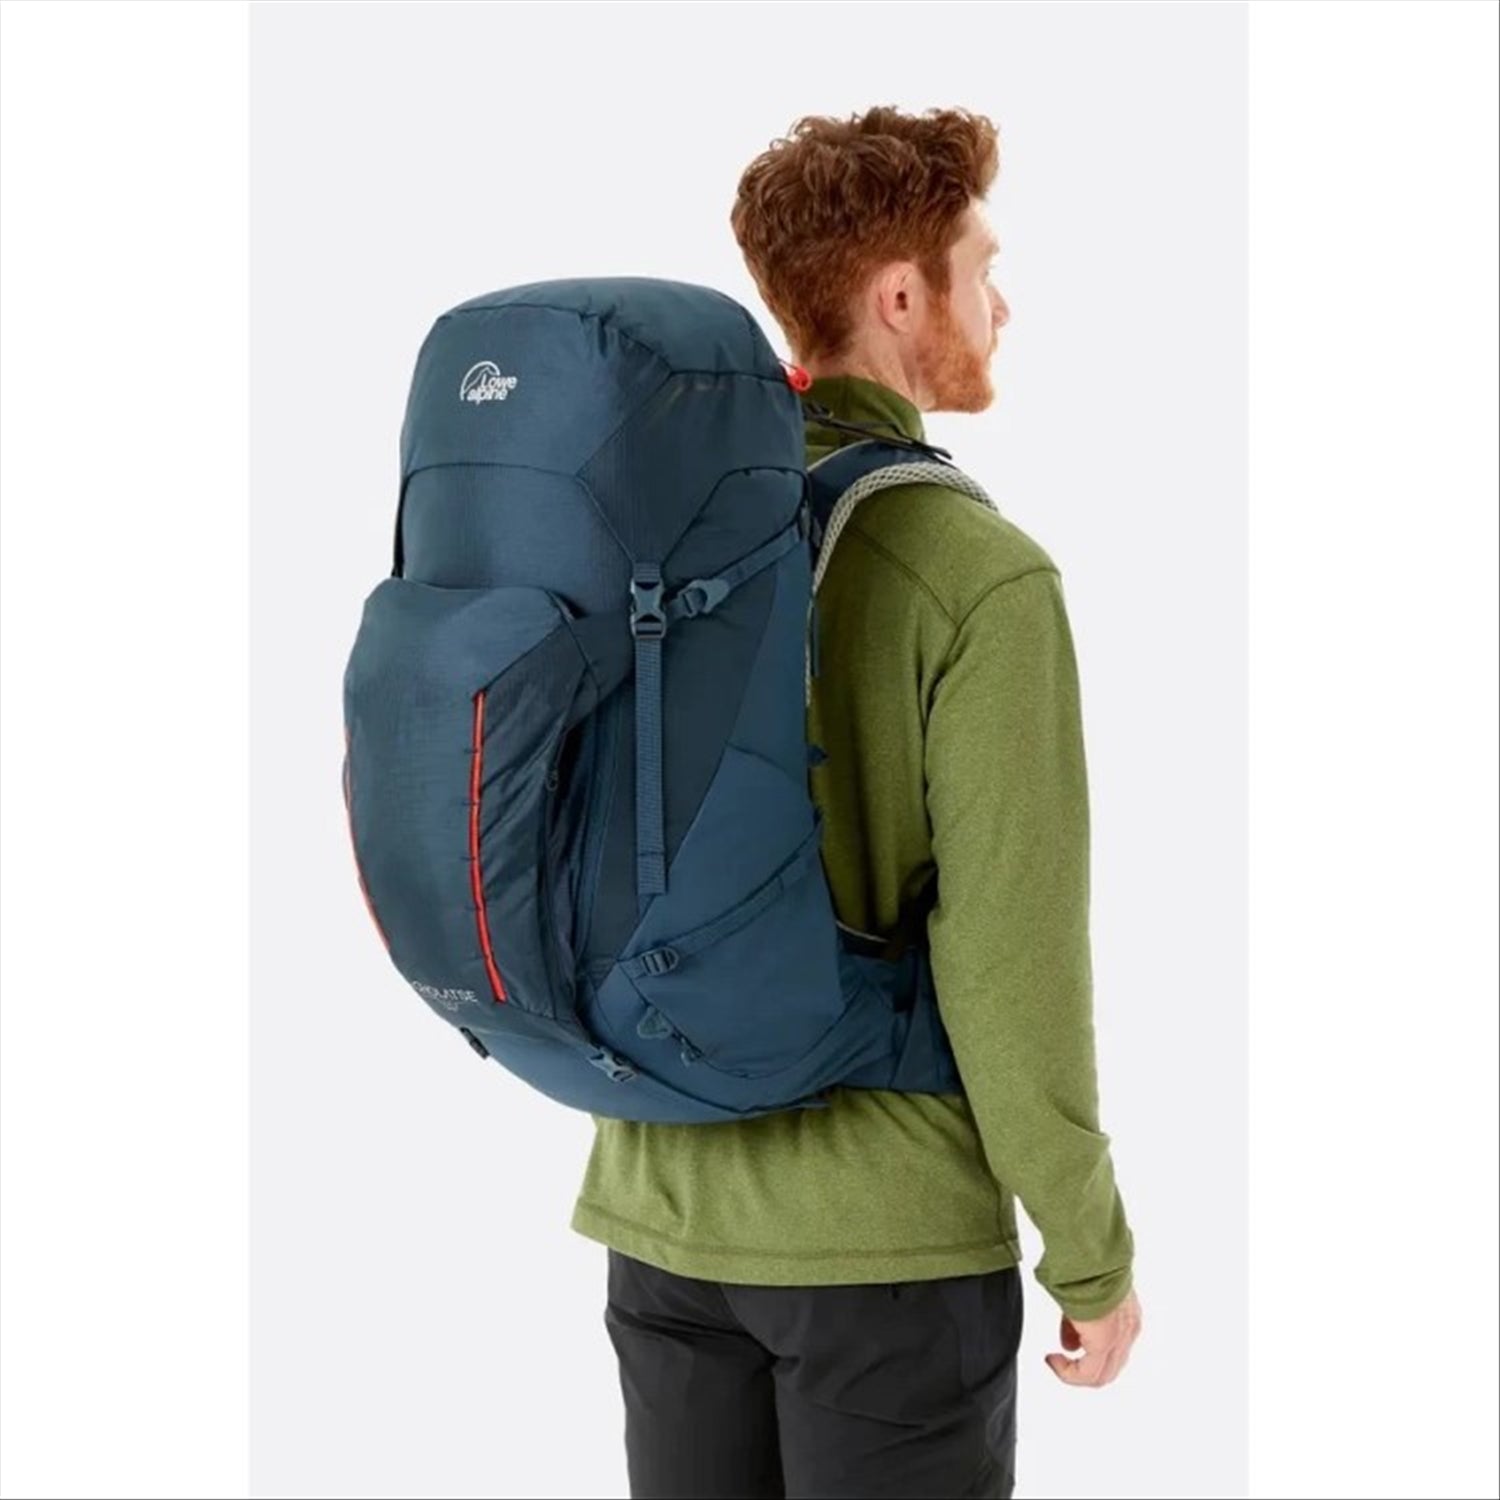 Lowe Alpine Cholatse 52:57 Backpack